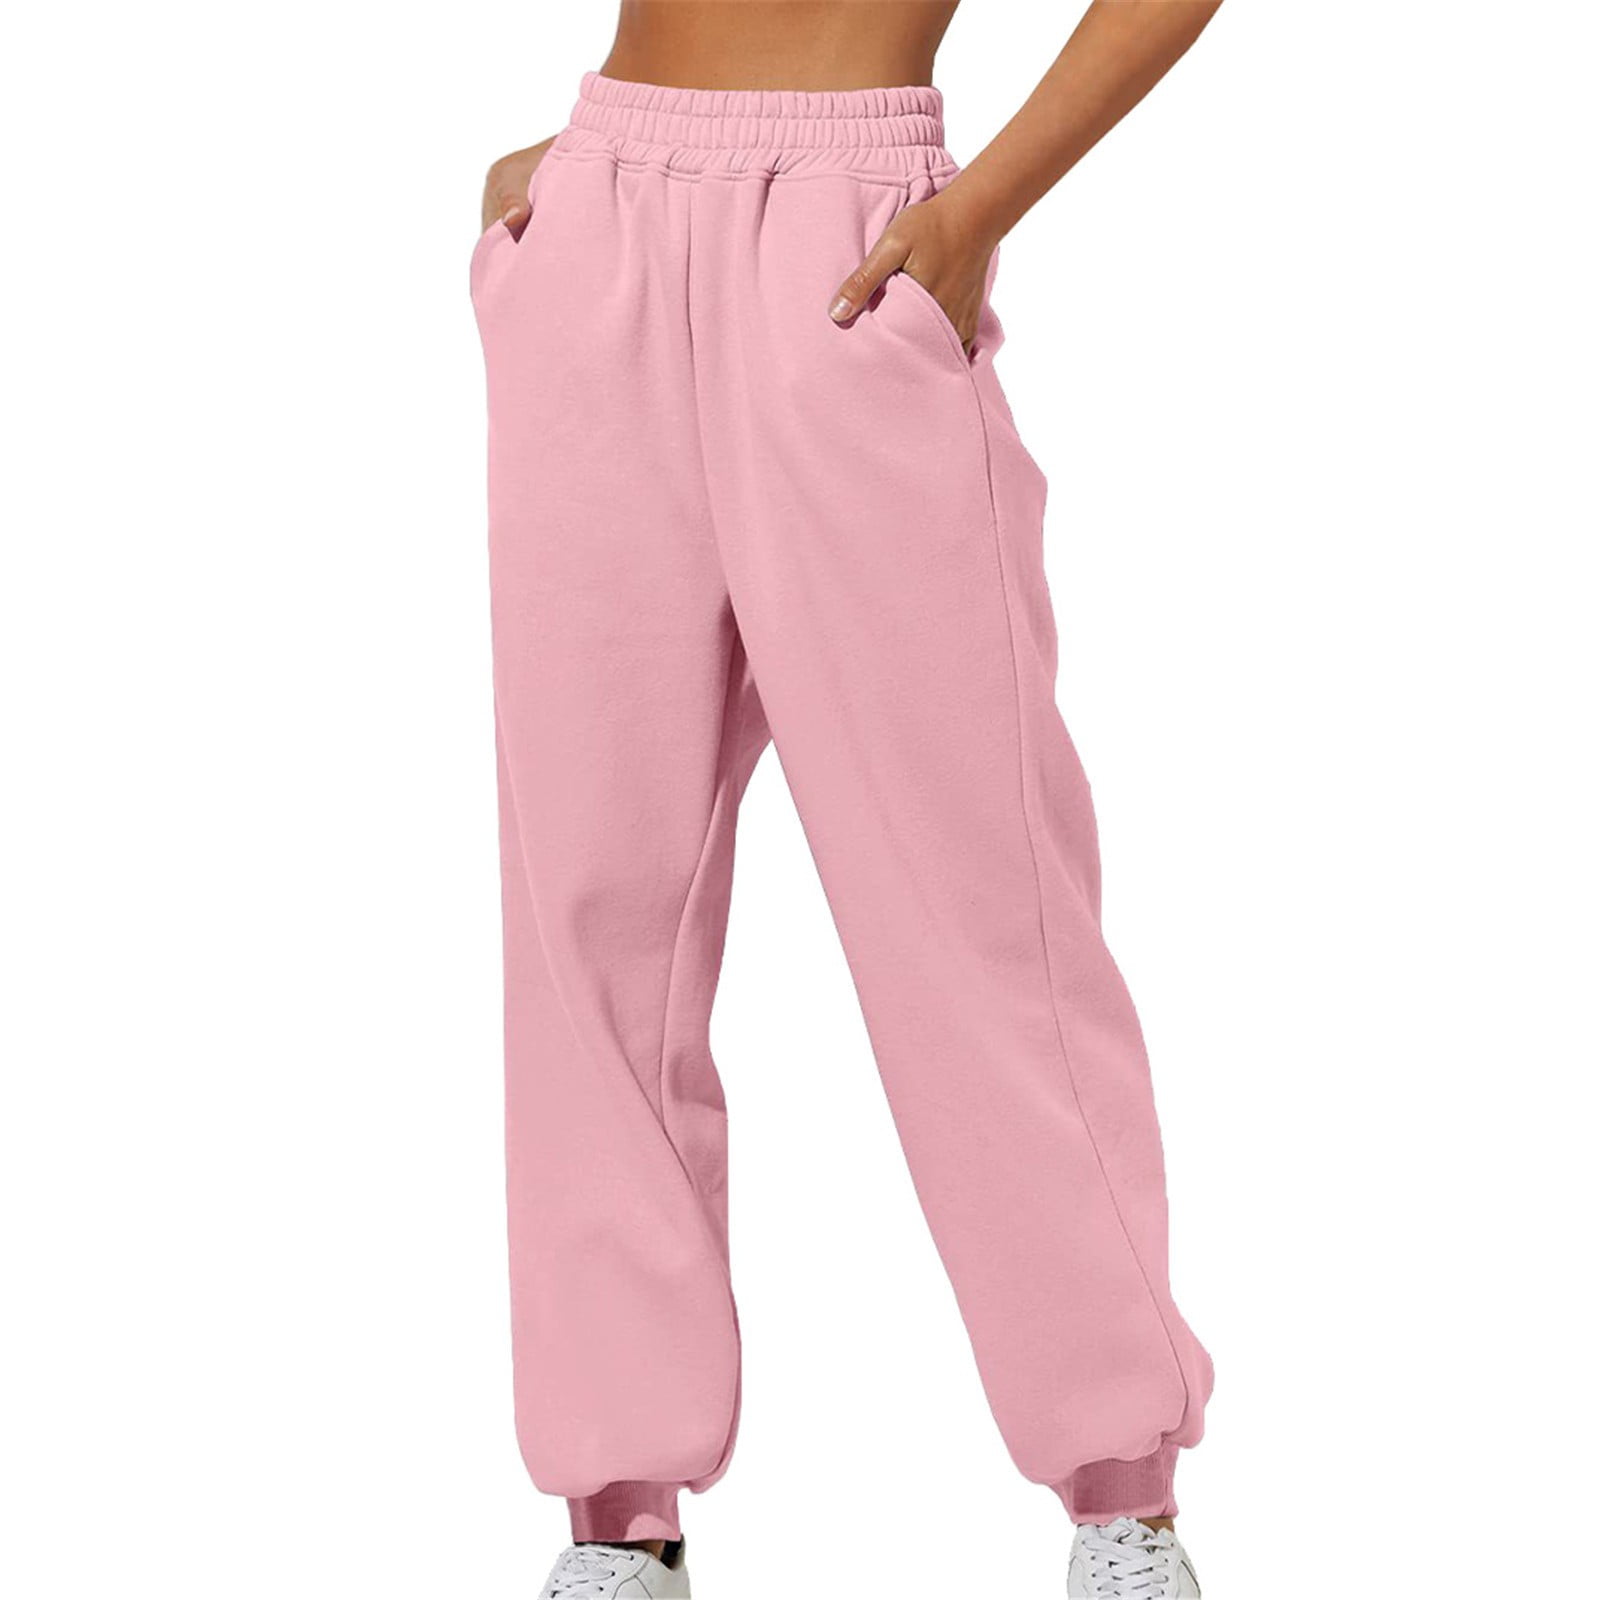 Zizocwa Preppy Sweatpants Plus Size Women Women'S Bottom Sweatpants Joggers  Pants Workout High Waisted Yoga Pants With Pockets Cute Leggings For Women  